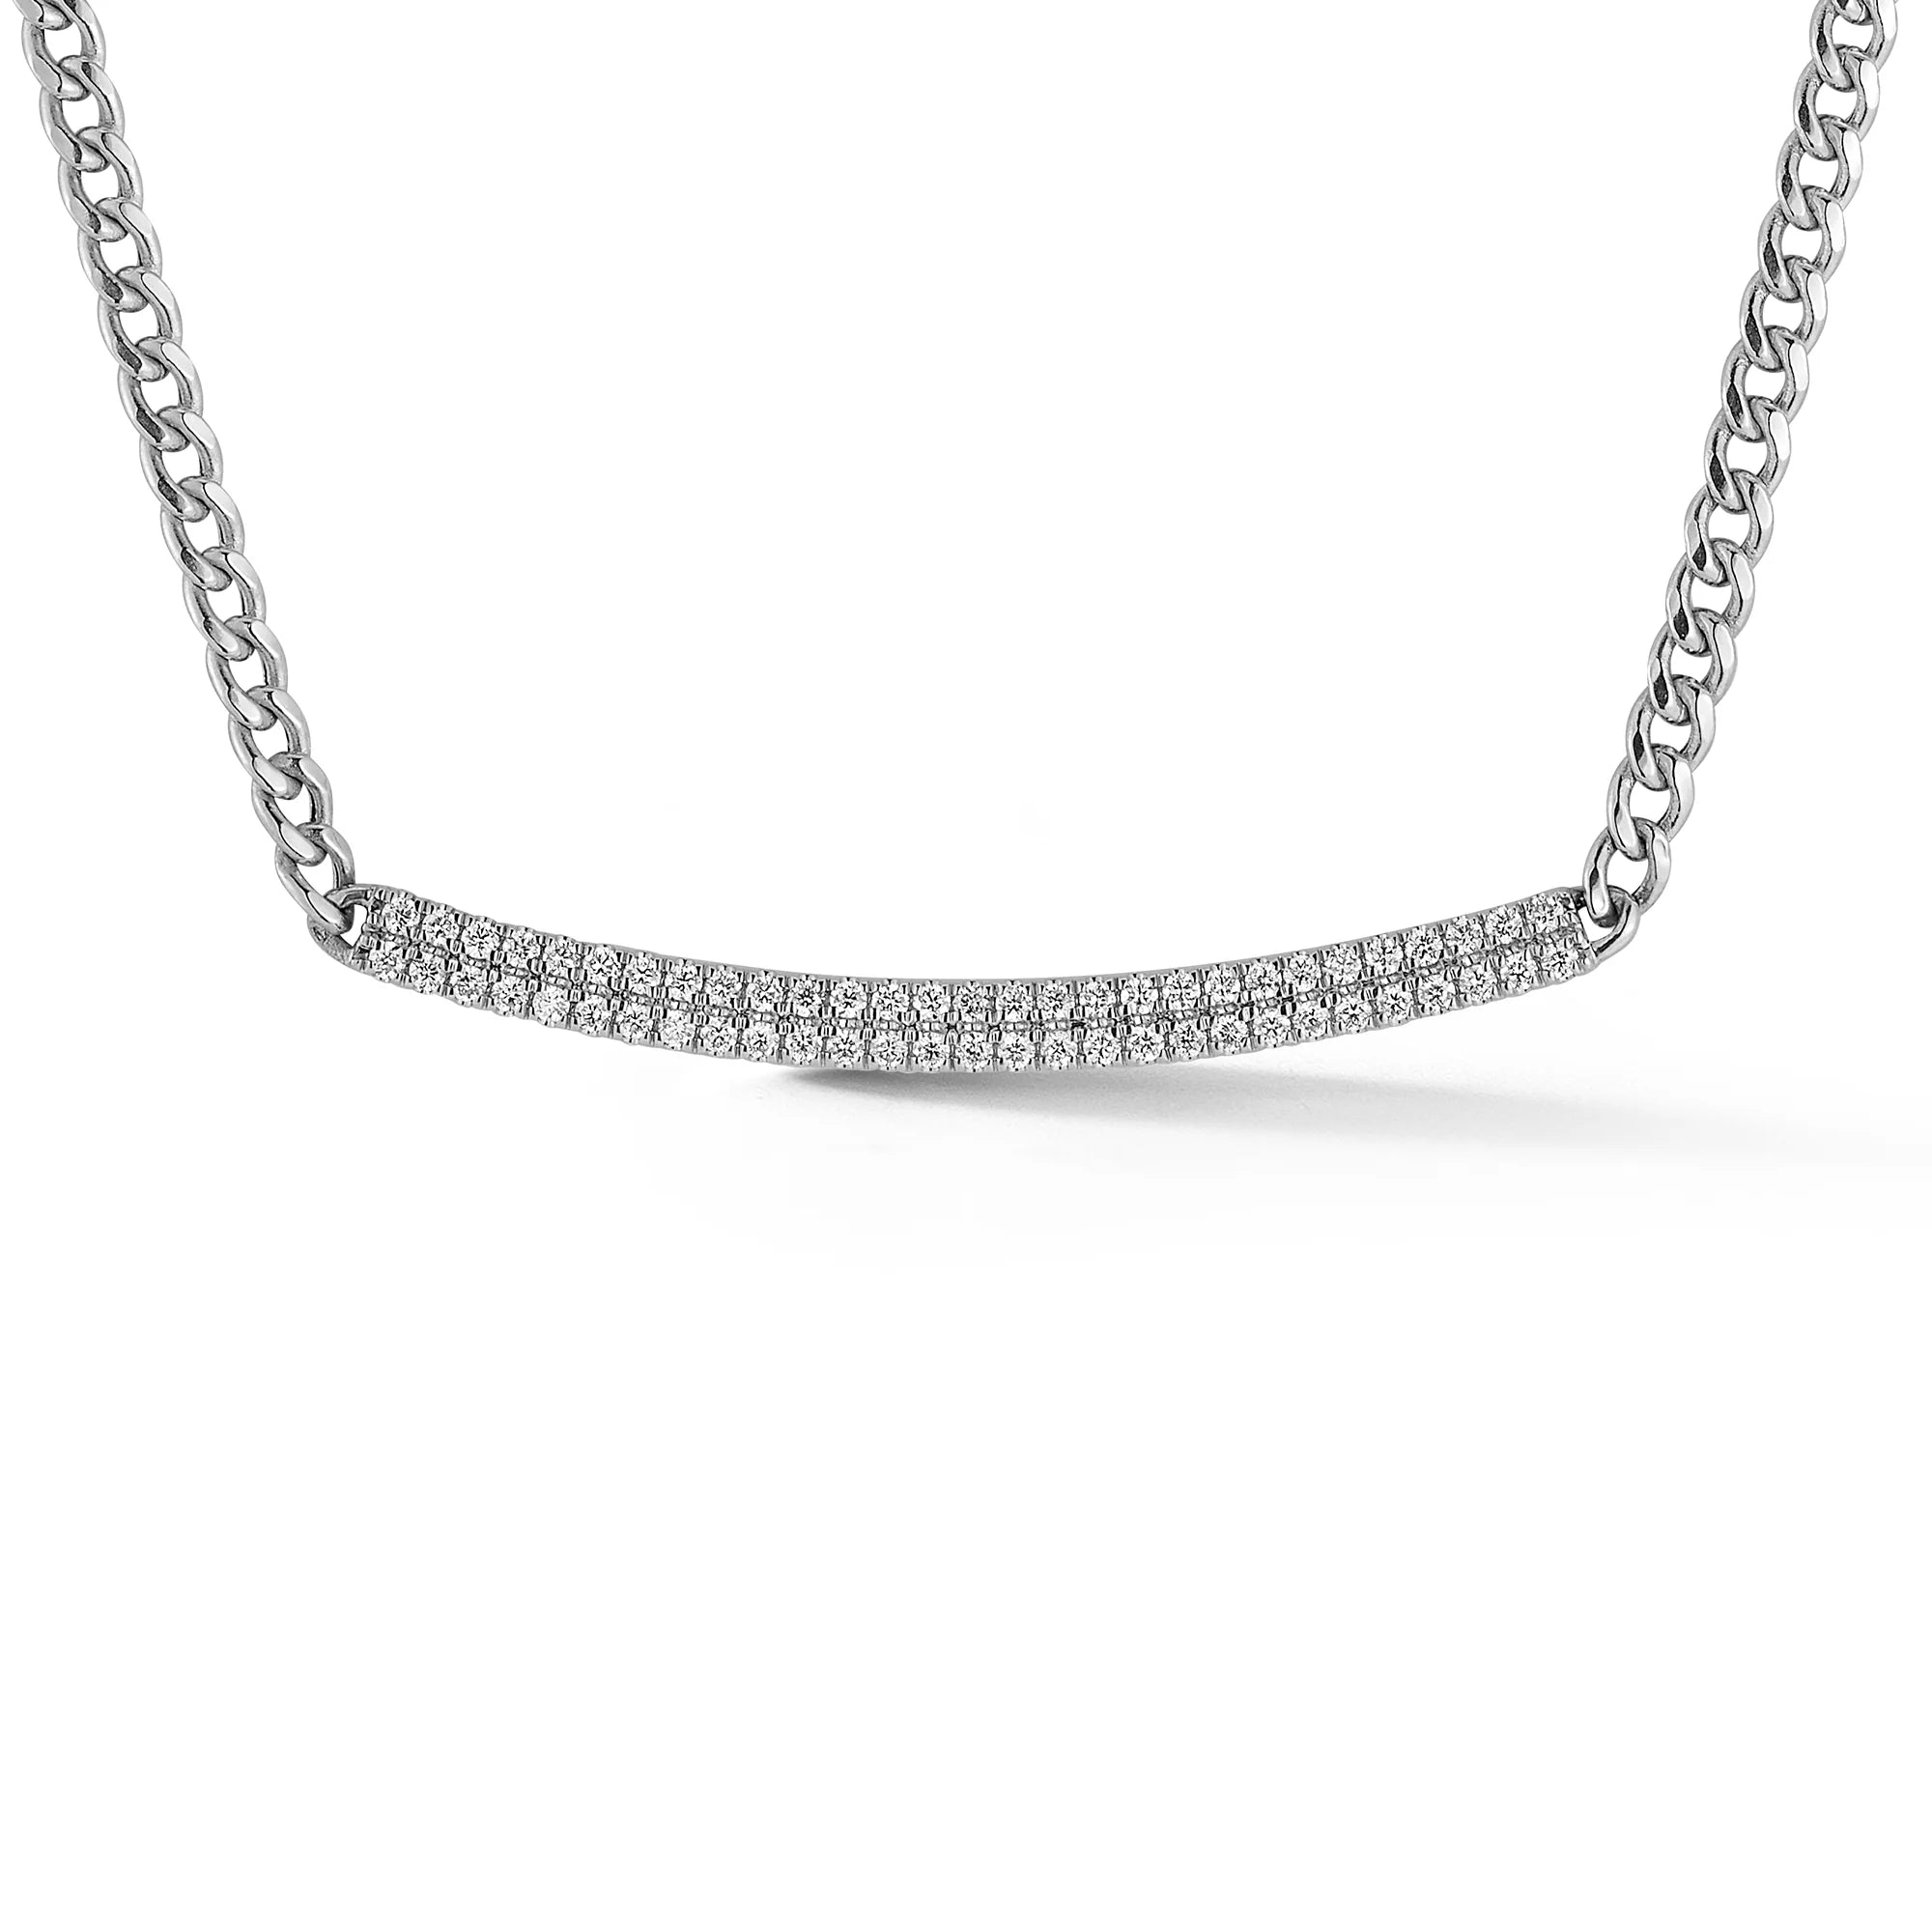 Vincents Fine Jewelry | Dana Rebecca | Sylvie Rose Medium Bar Necklace